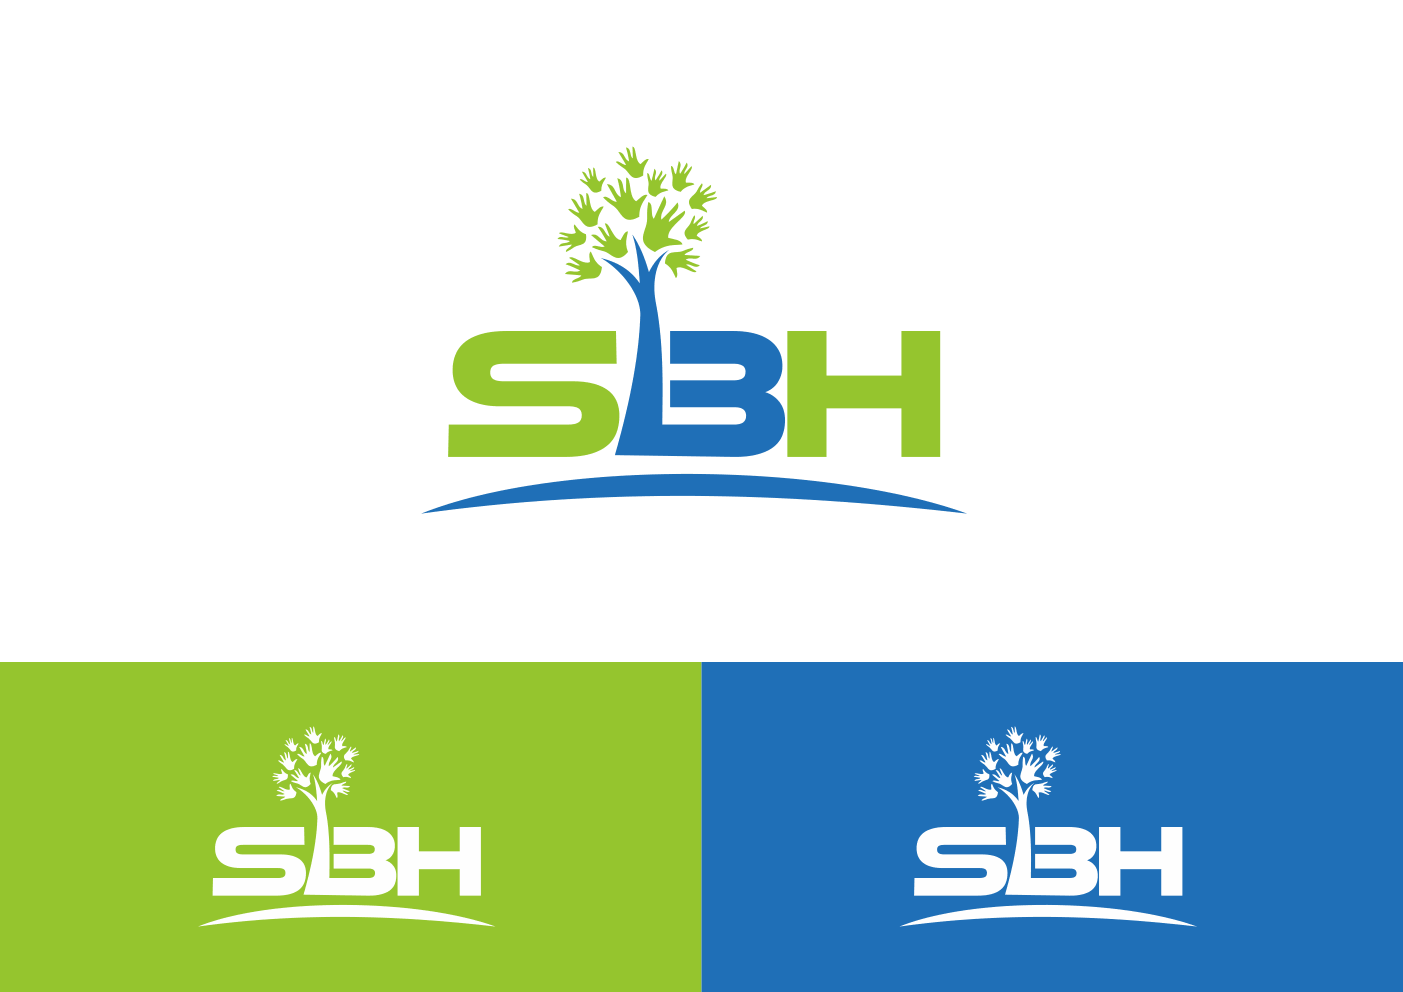 SBH Logo - Serious, Elegant, Community Service Logo Design for SBH - tag line ...